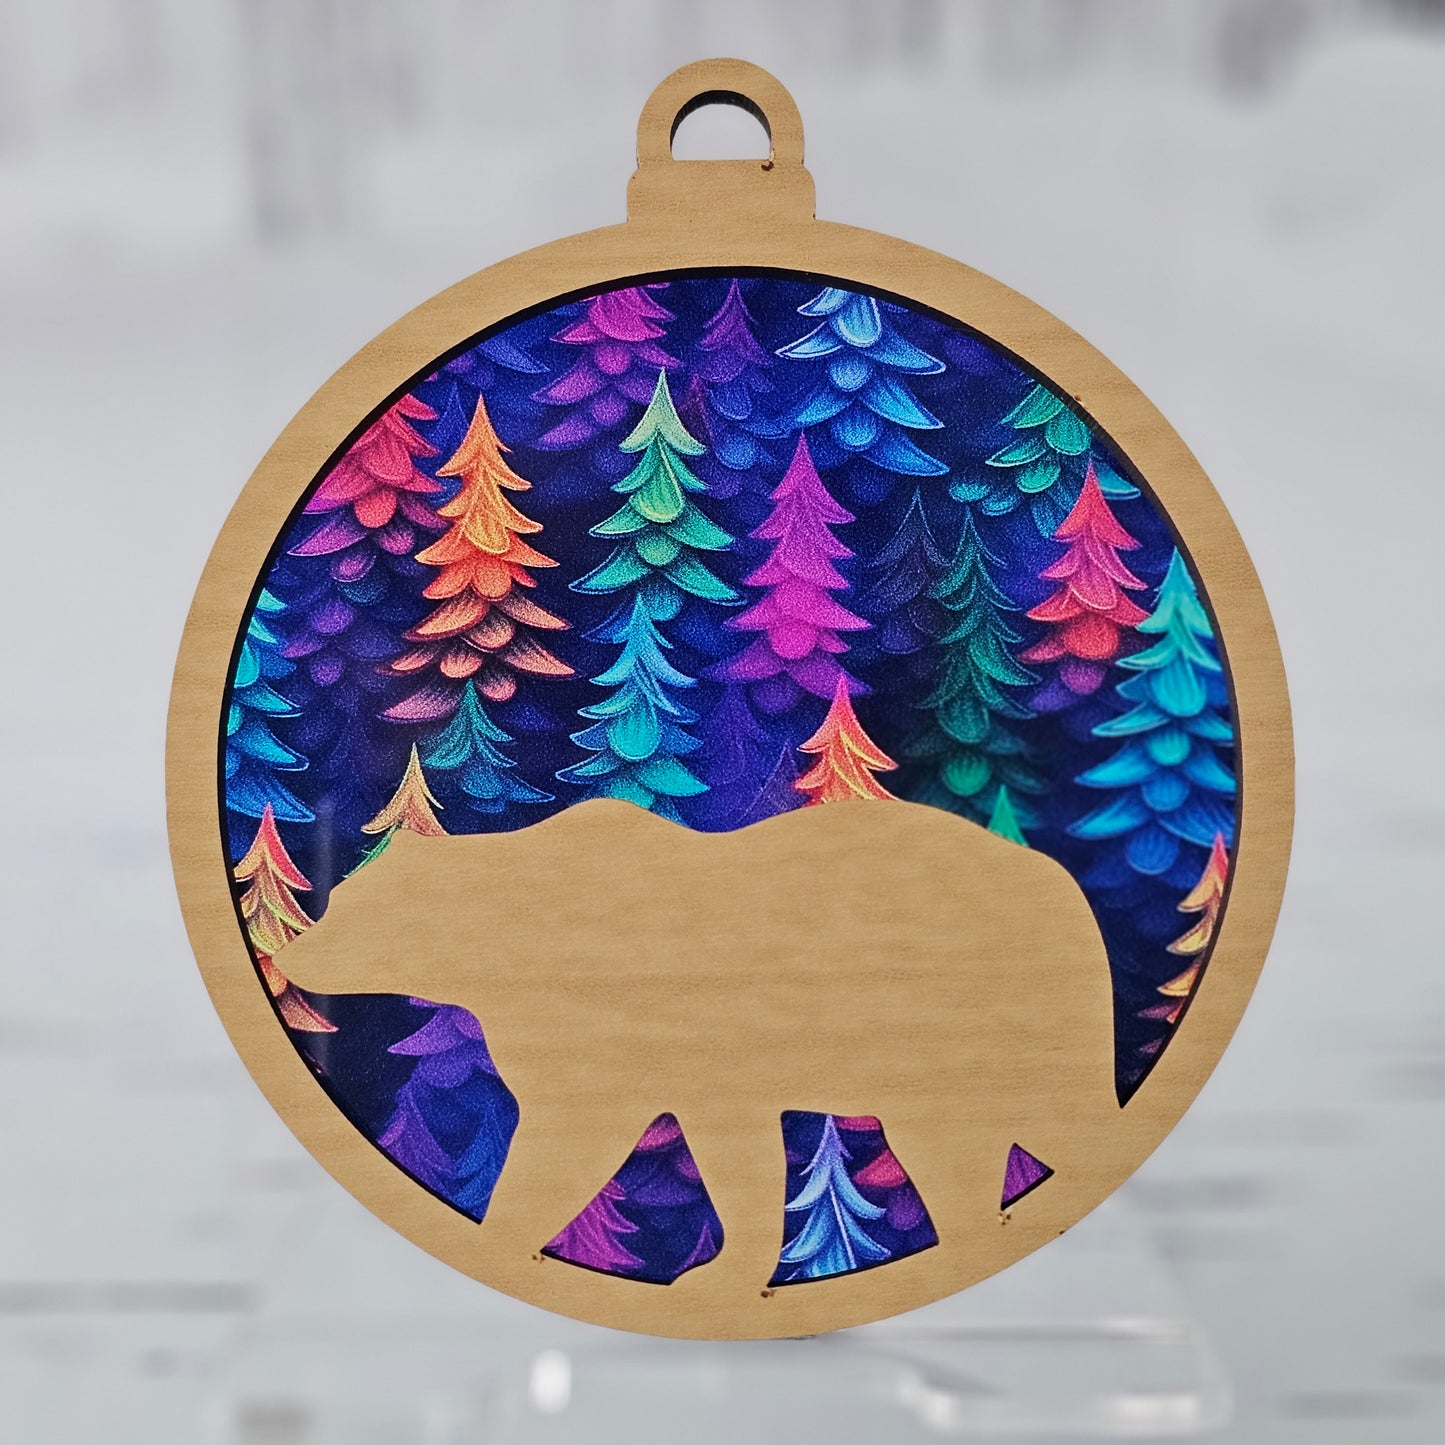 Bear Suncatcher Ornament - Translucent Pinecone Trees